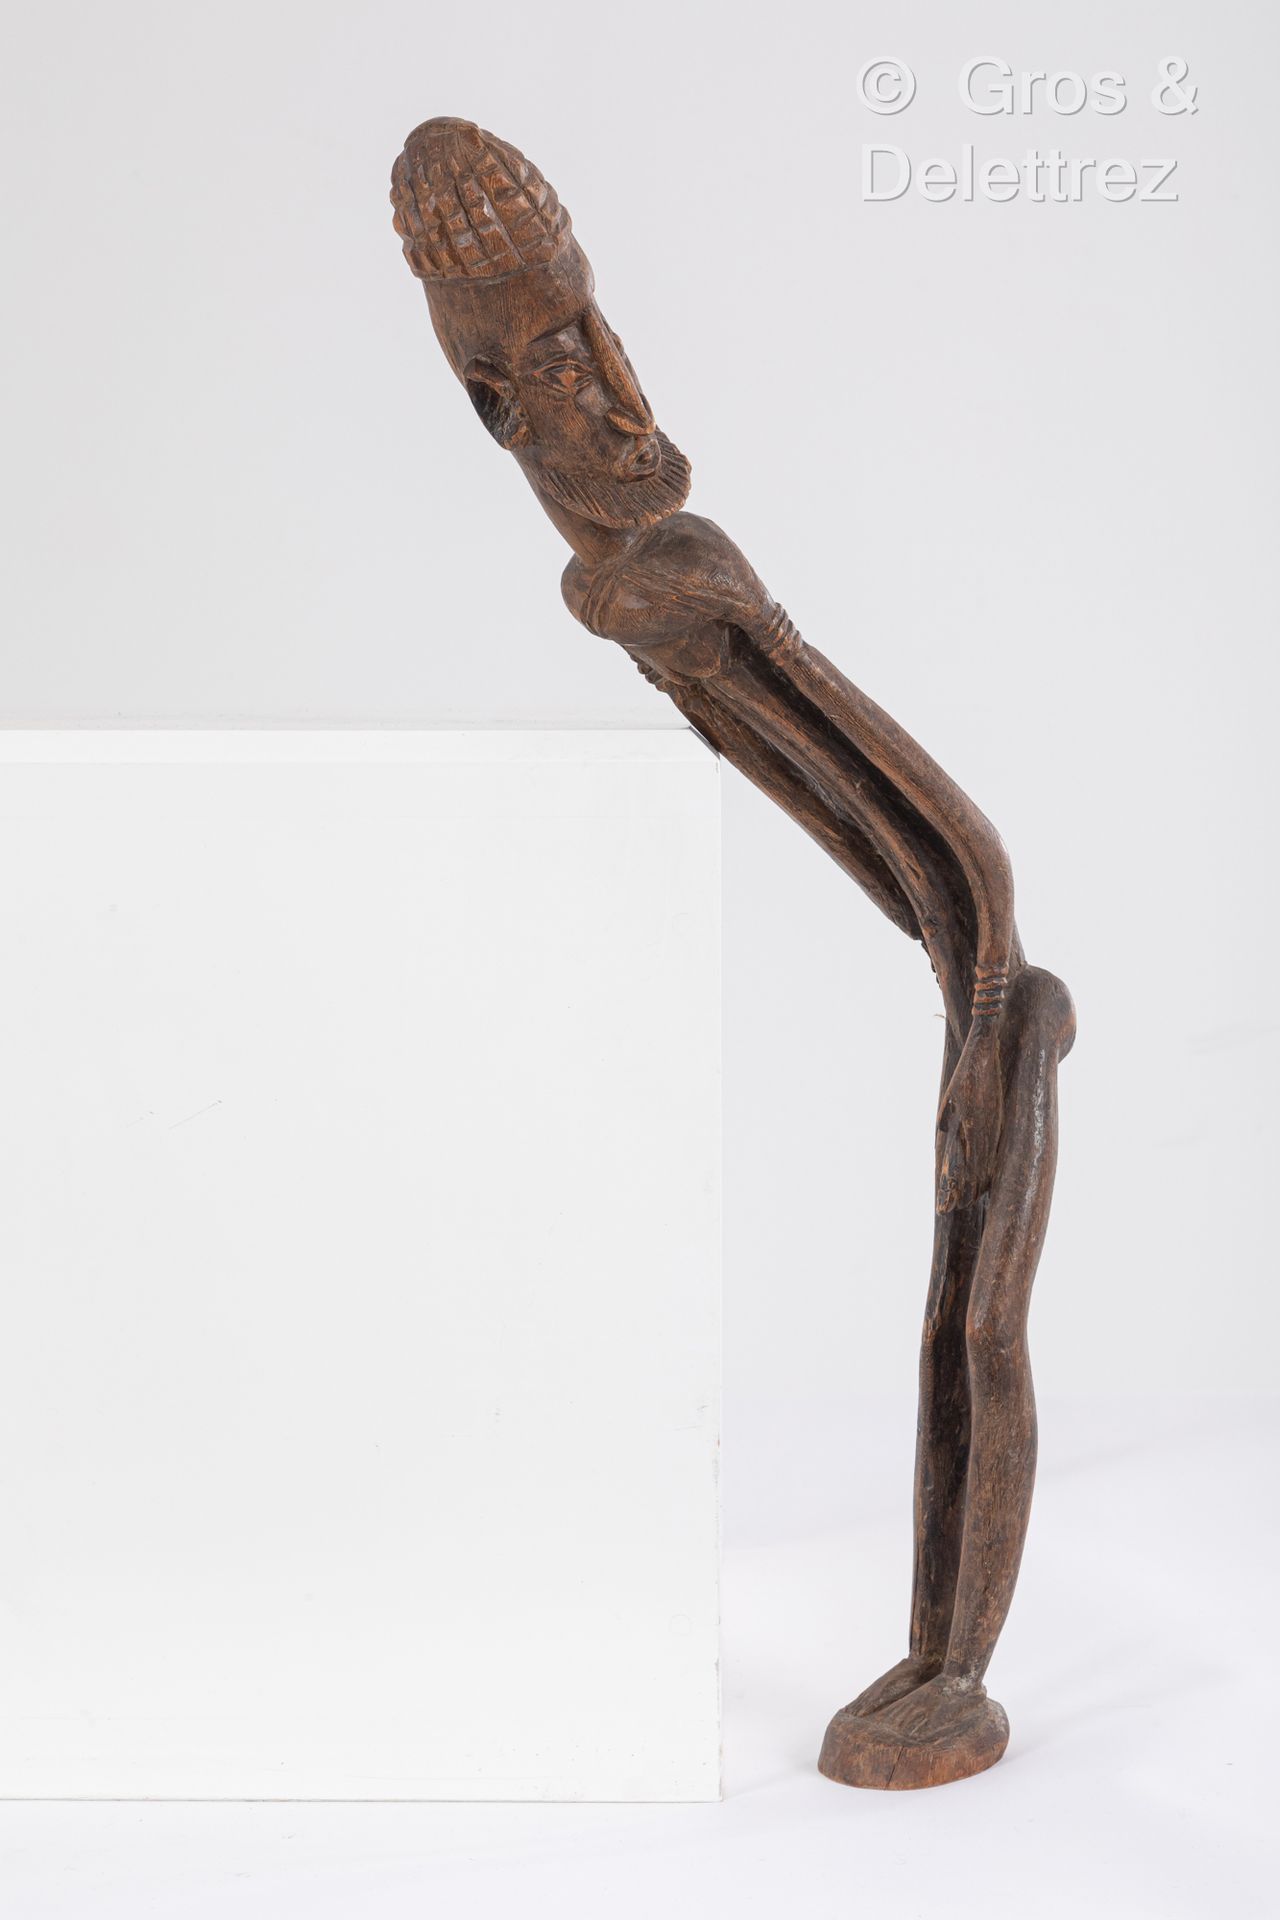 Style Dogon, MALI 男性形象的雕塑。
现代。
高度：60厘米。